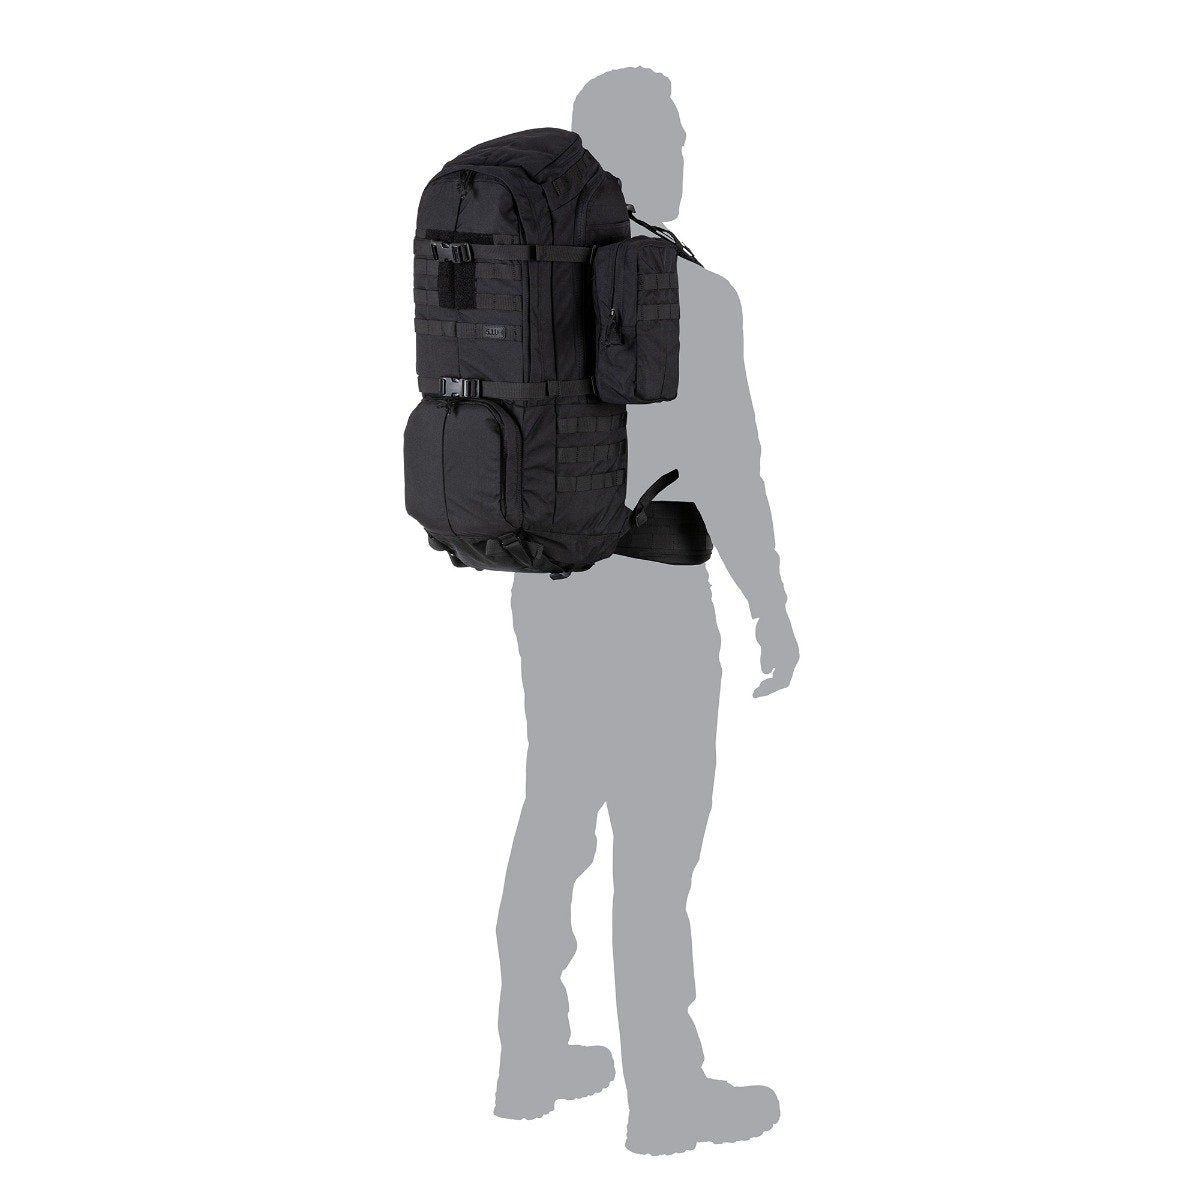 5.11 Tactical Rush100 60L Backpack Black